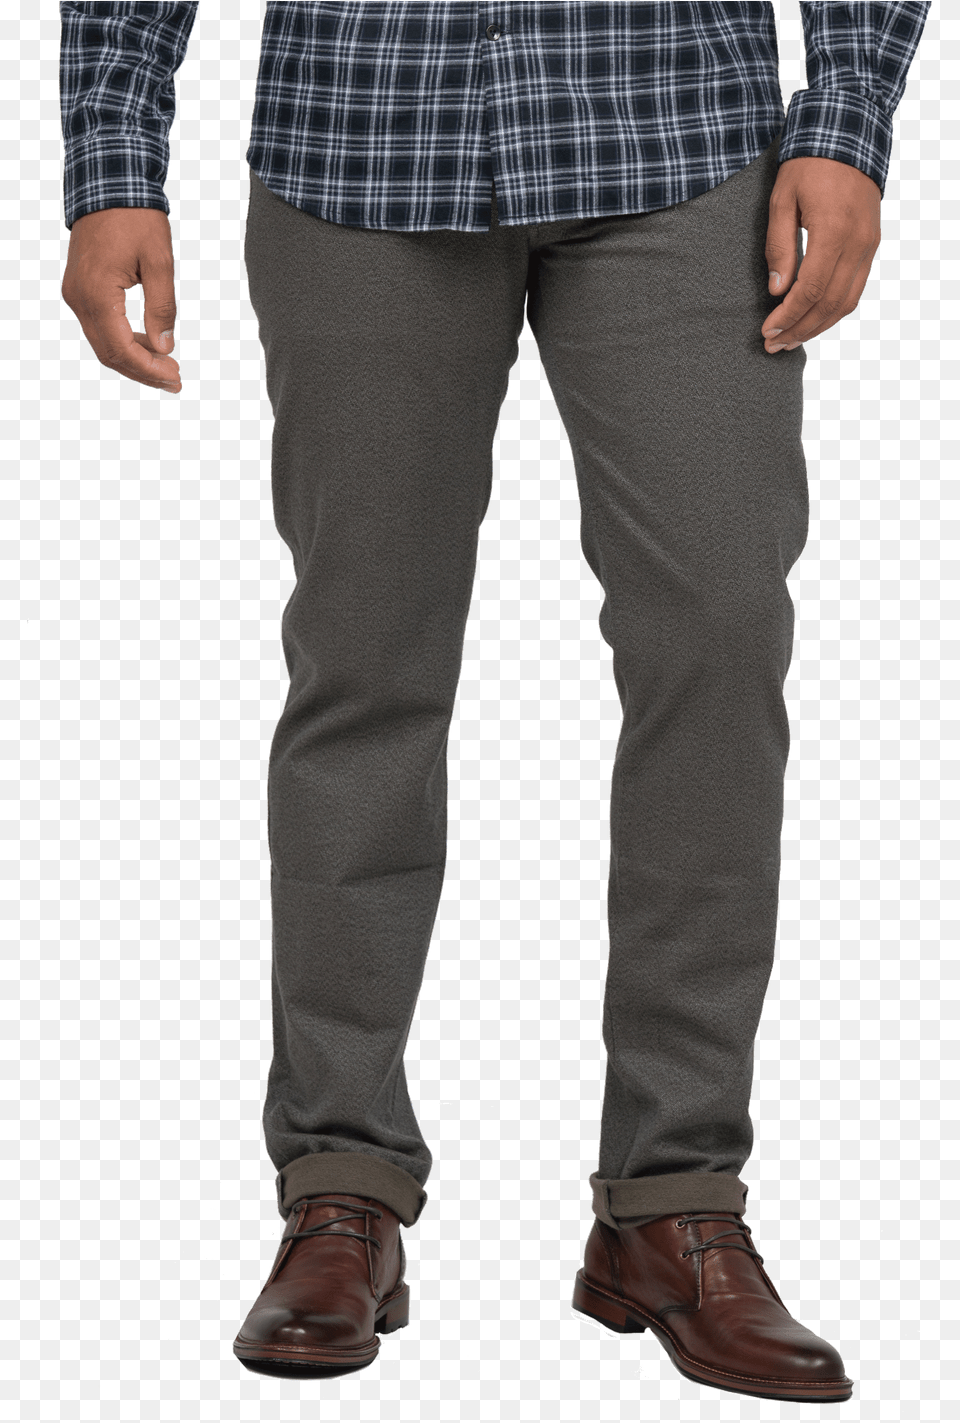 Get The Romford Texture Pants In Green Online Tartan, Clothing, Footwear, Shoe, Jeans Png